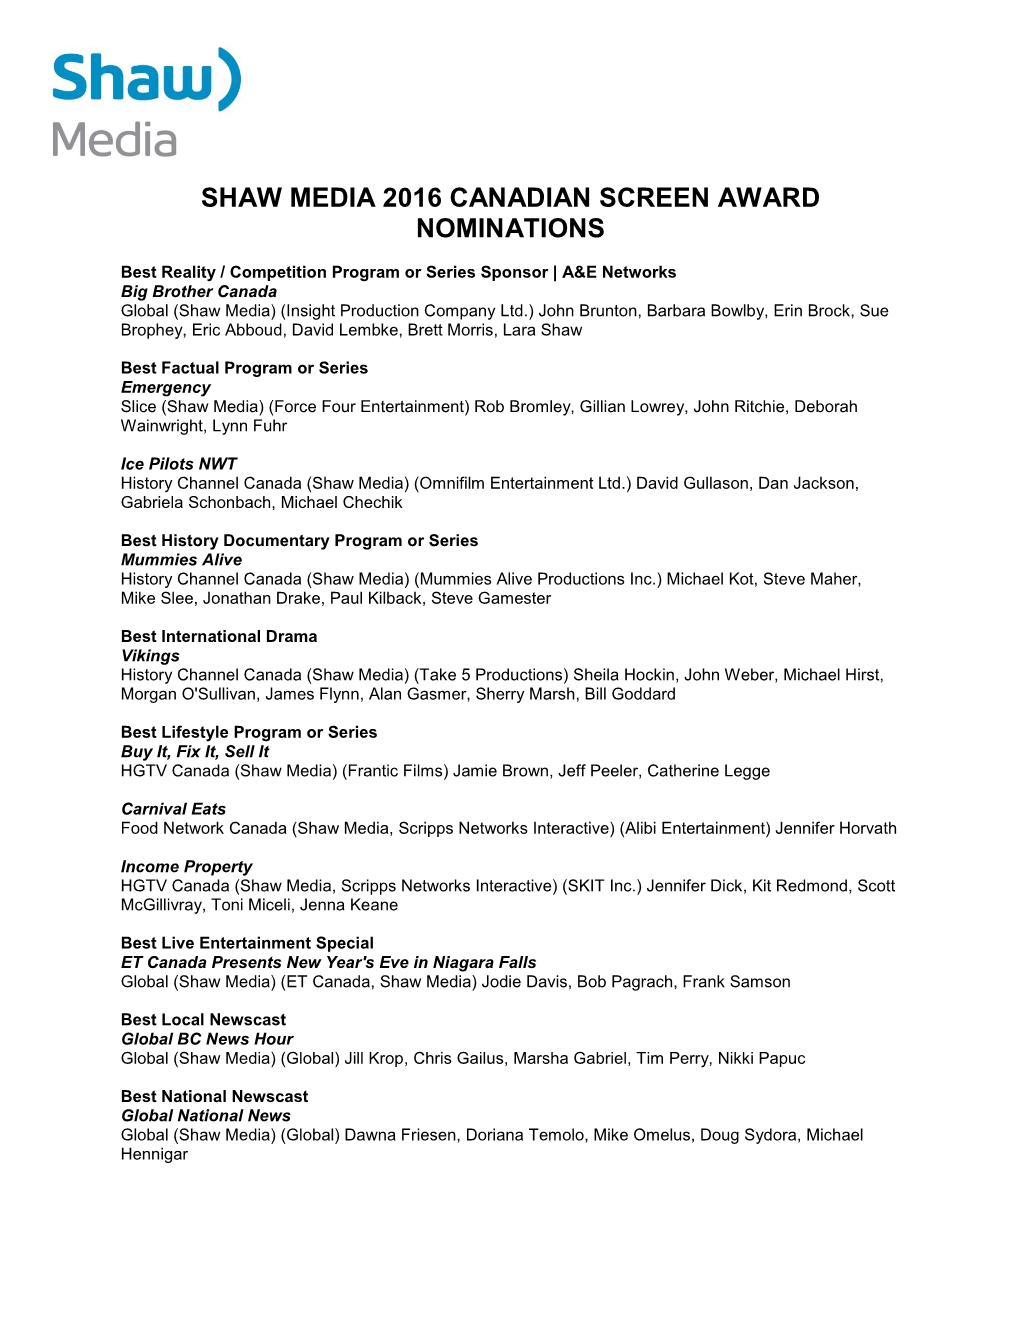 Shaw Media 2016 Canadian Screen Award Nominations